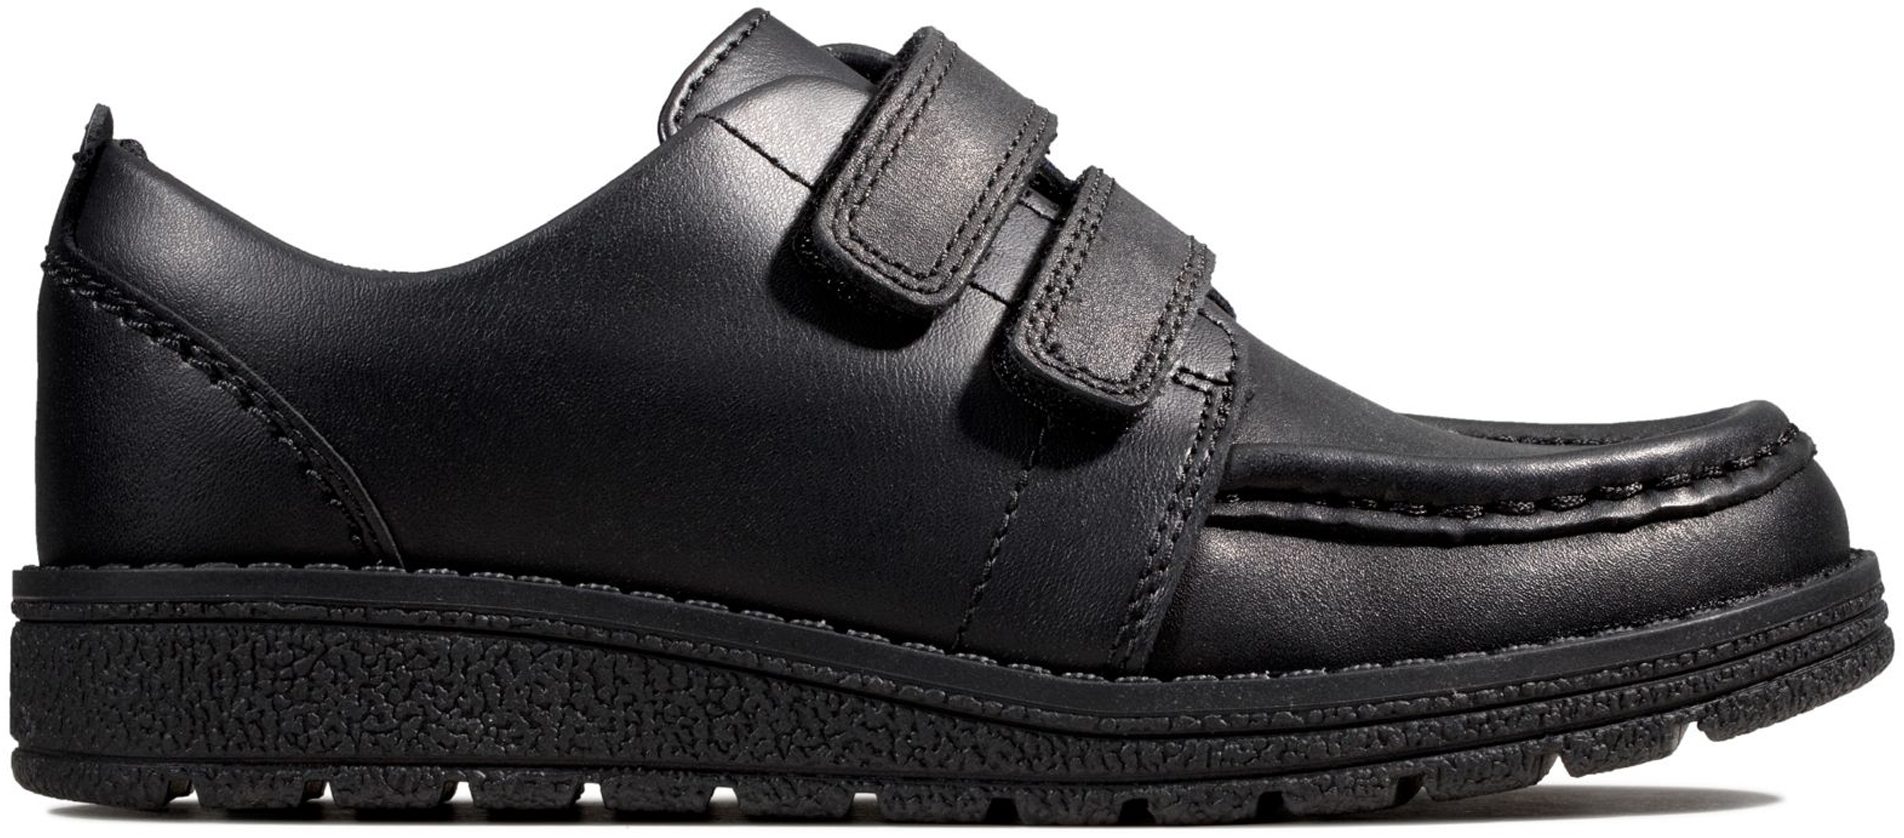 Clarks Mendip Bright Kid Black Leather 26142892 - Boys School Shoes ...